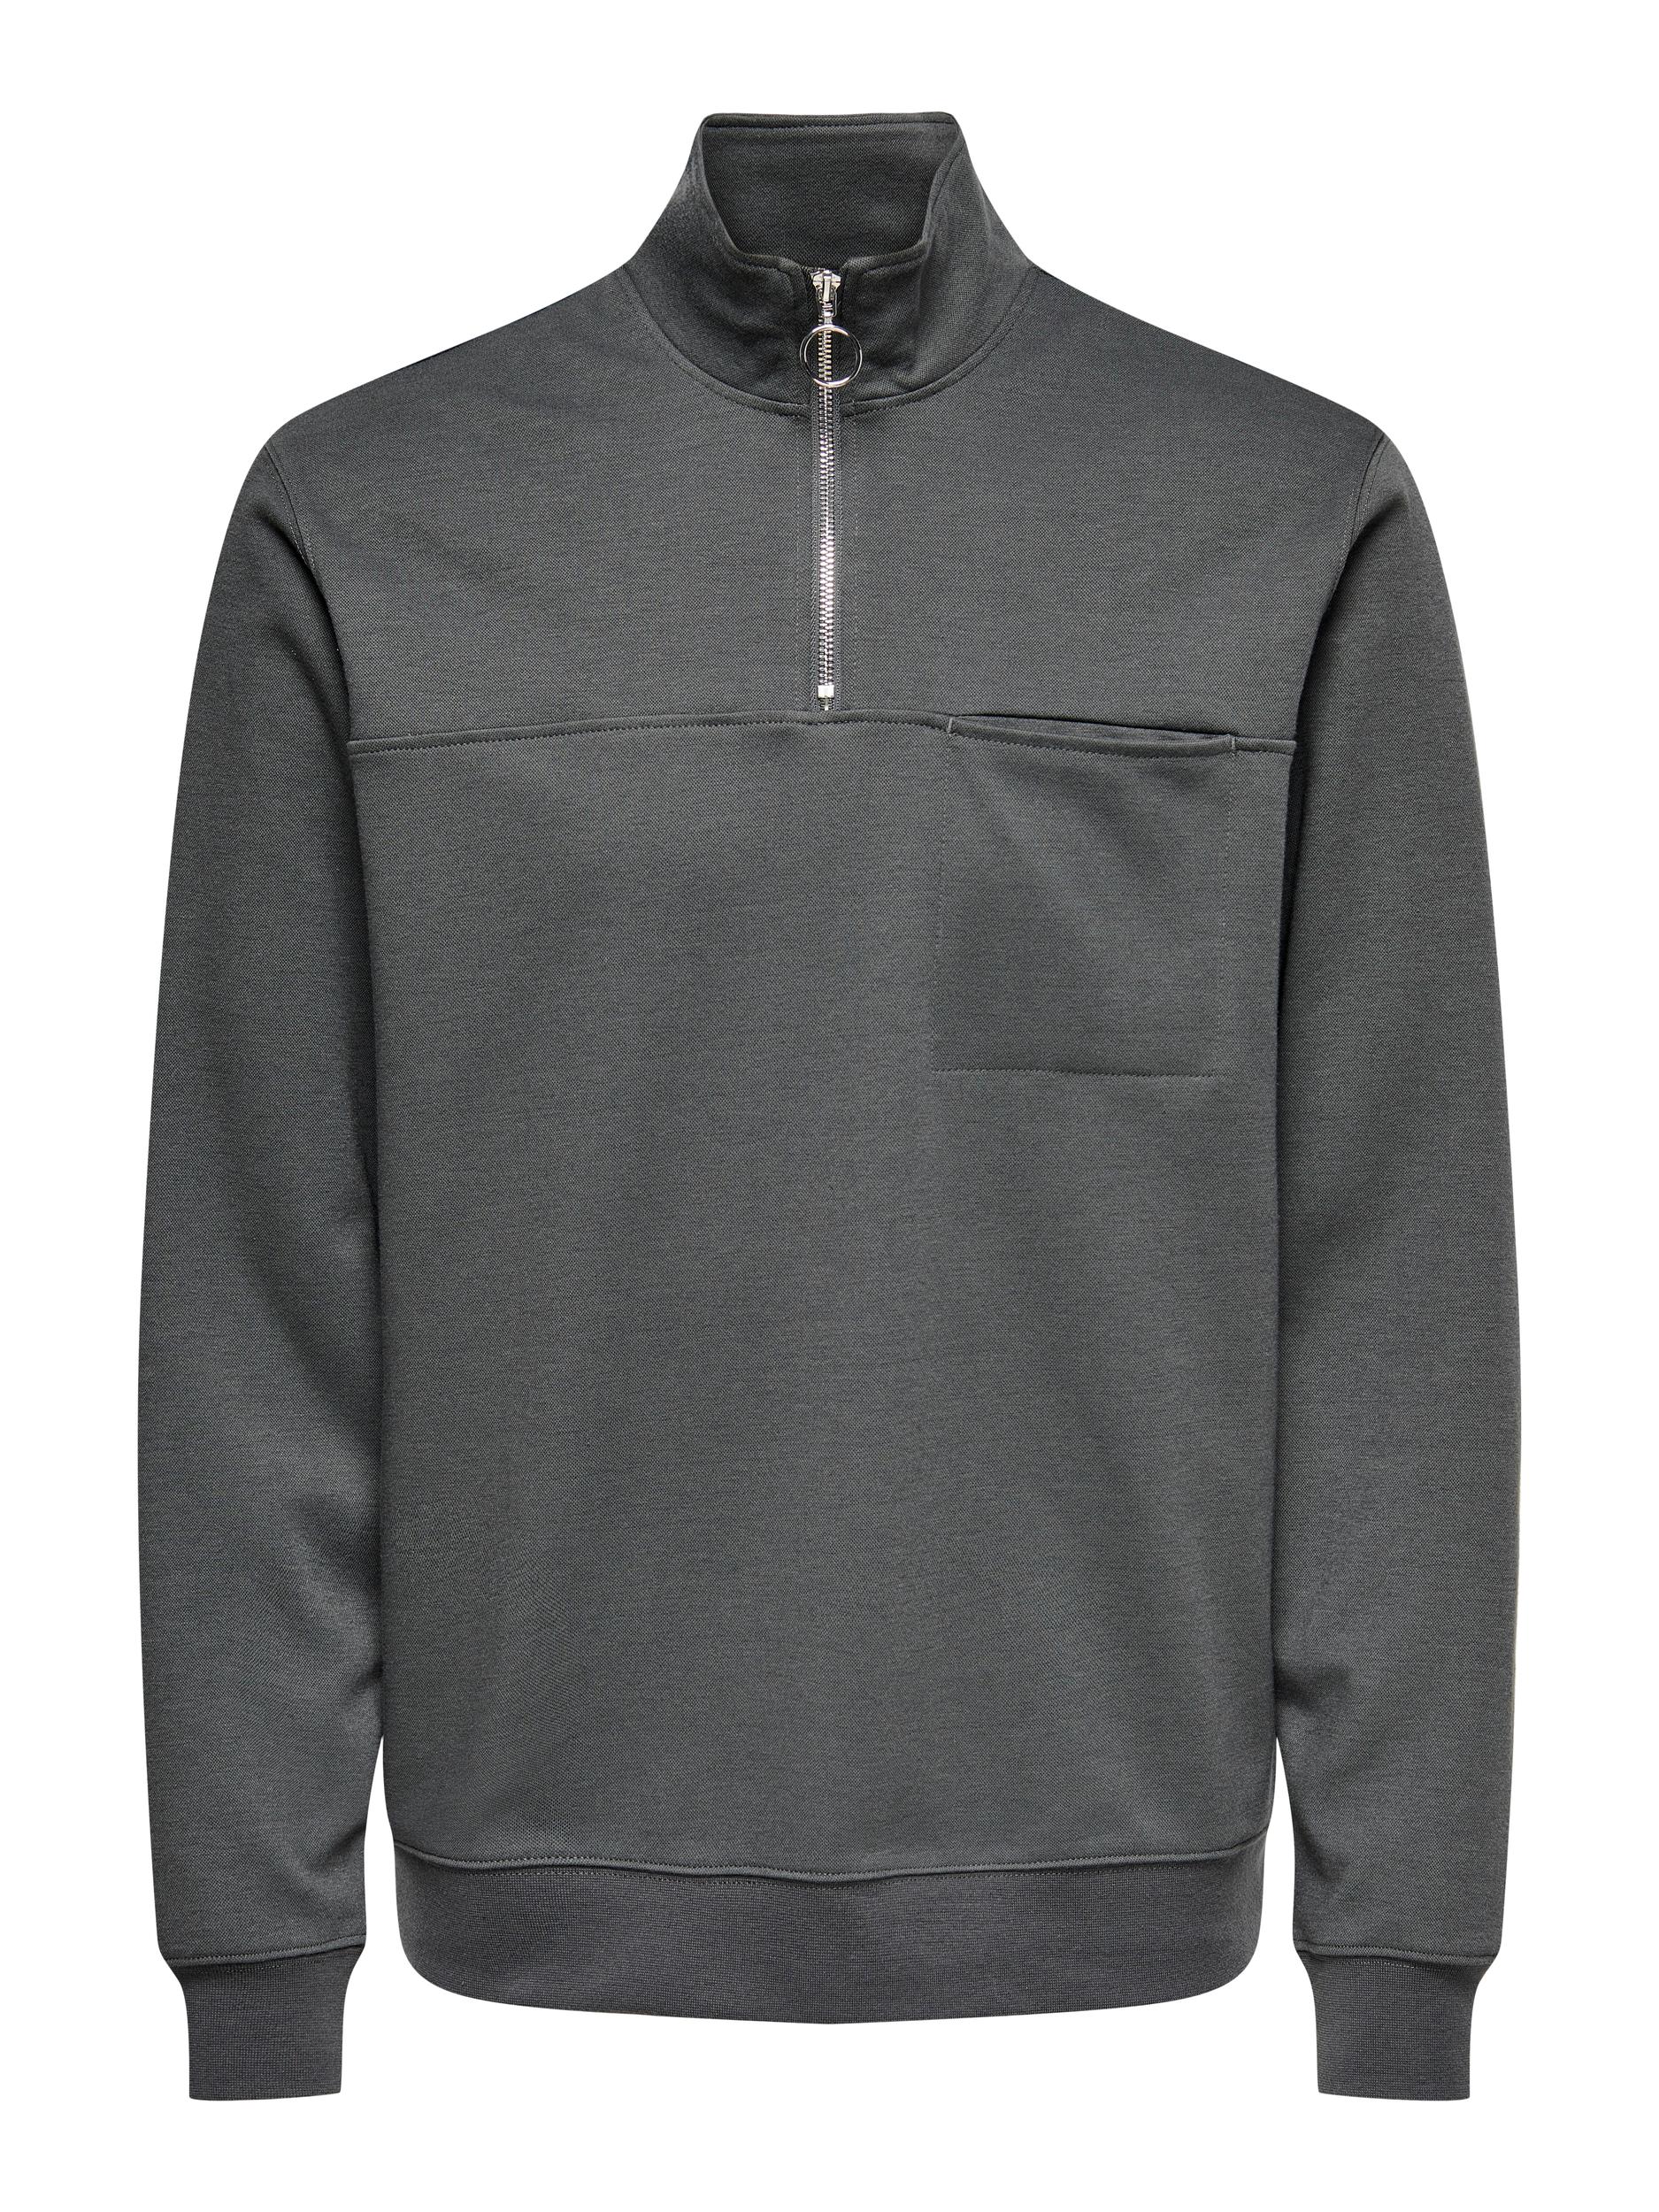 ONLY Oxley Sweatshirt, Grey Pinstripe, XL